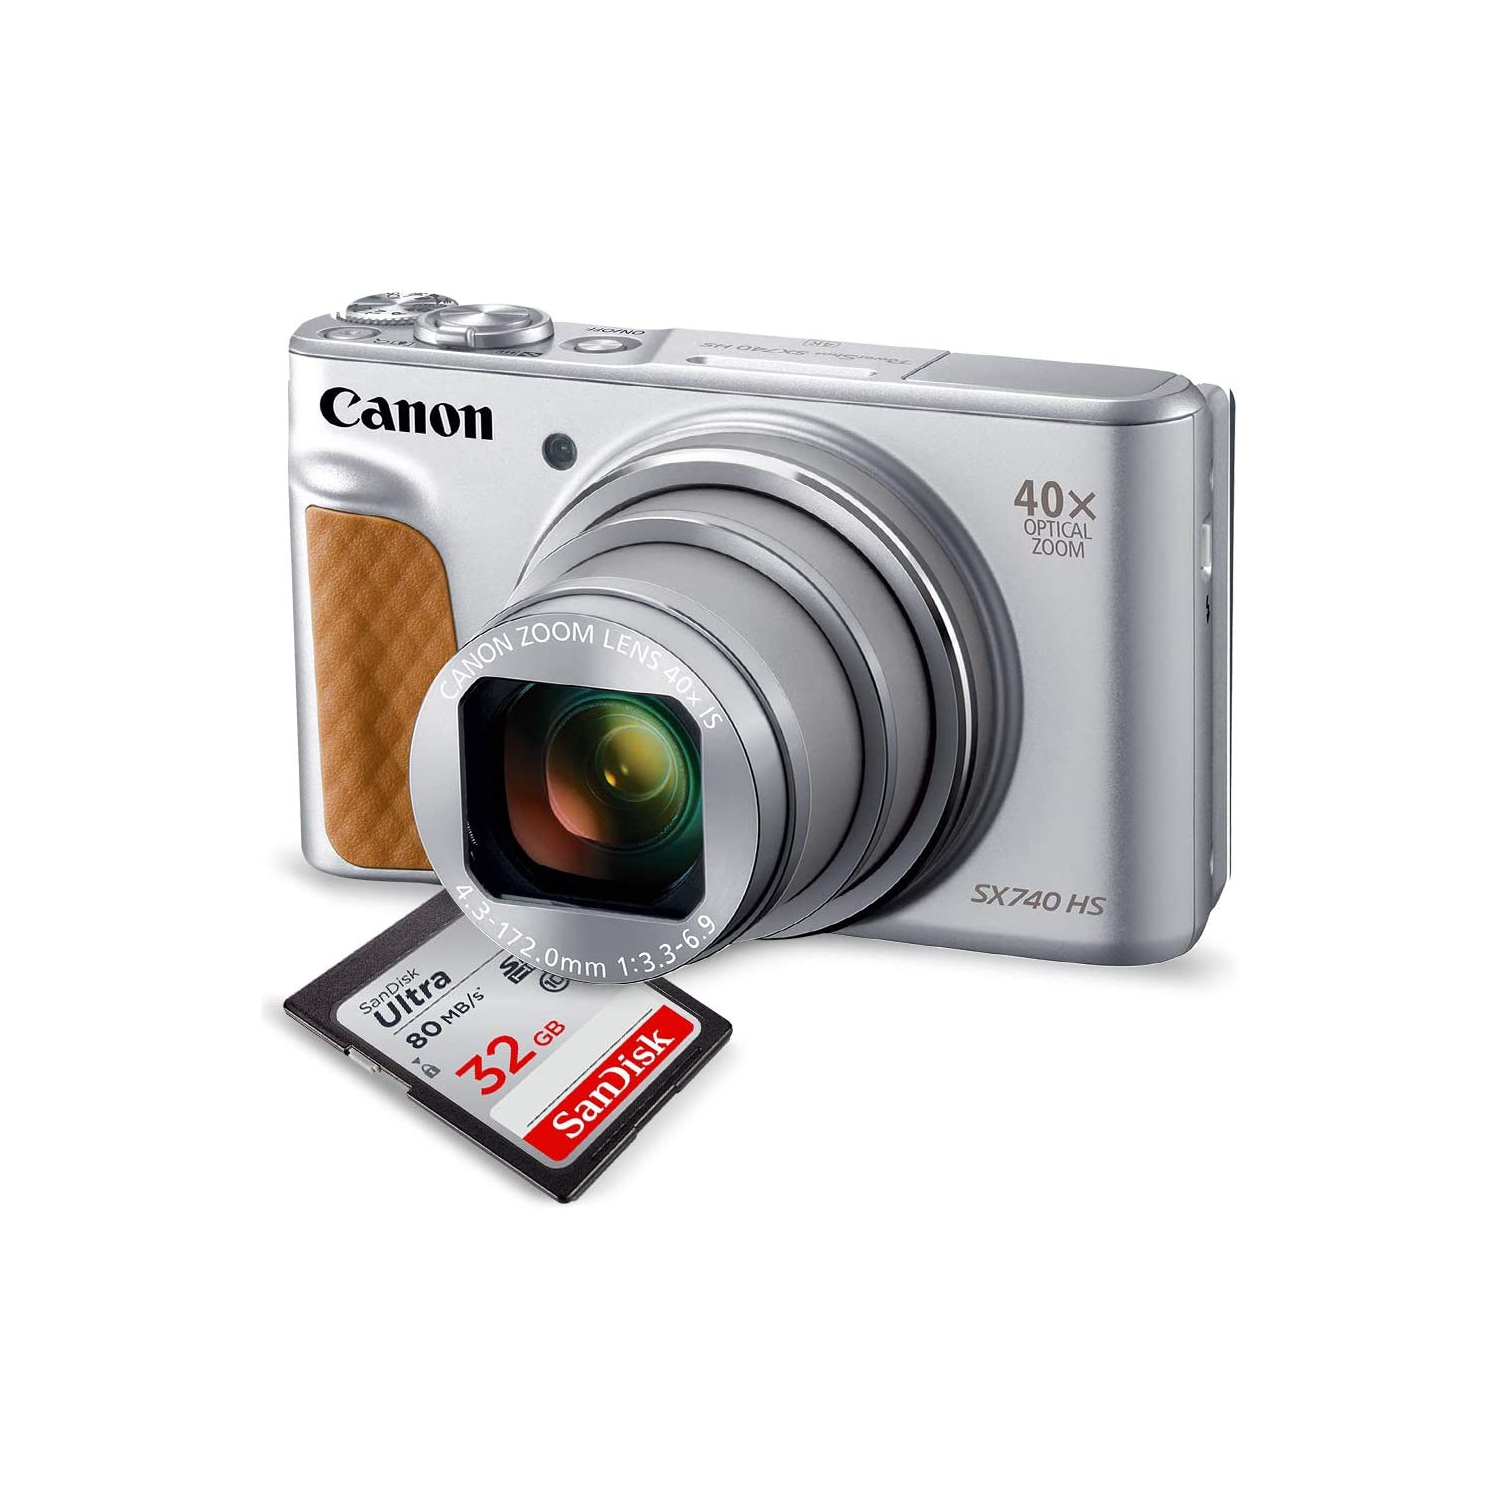 Canon PowerShot SX740 HS Digital Camera (Silver) with 32GB Card, International Version